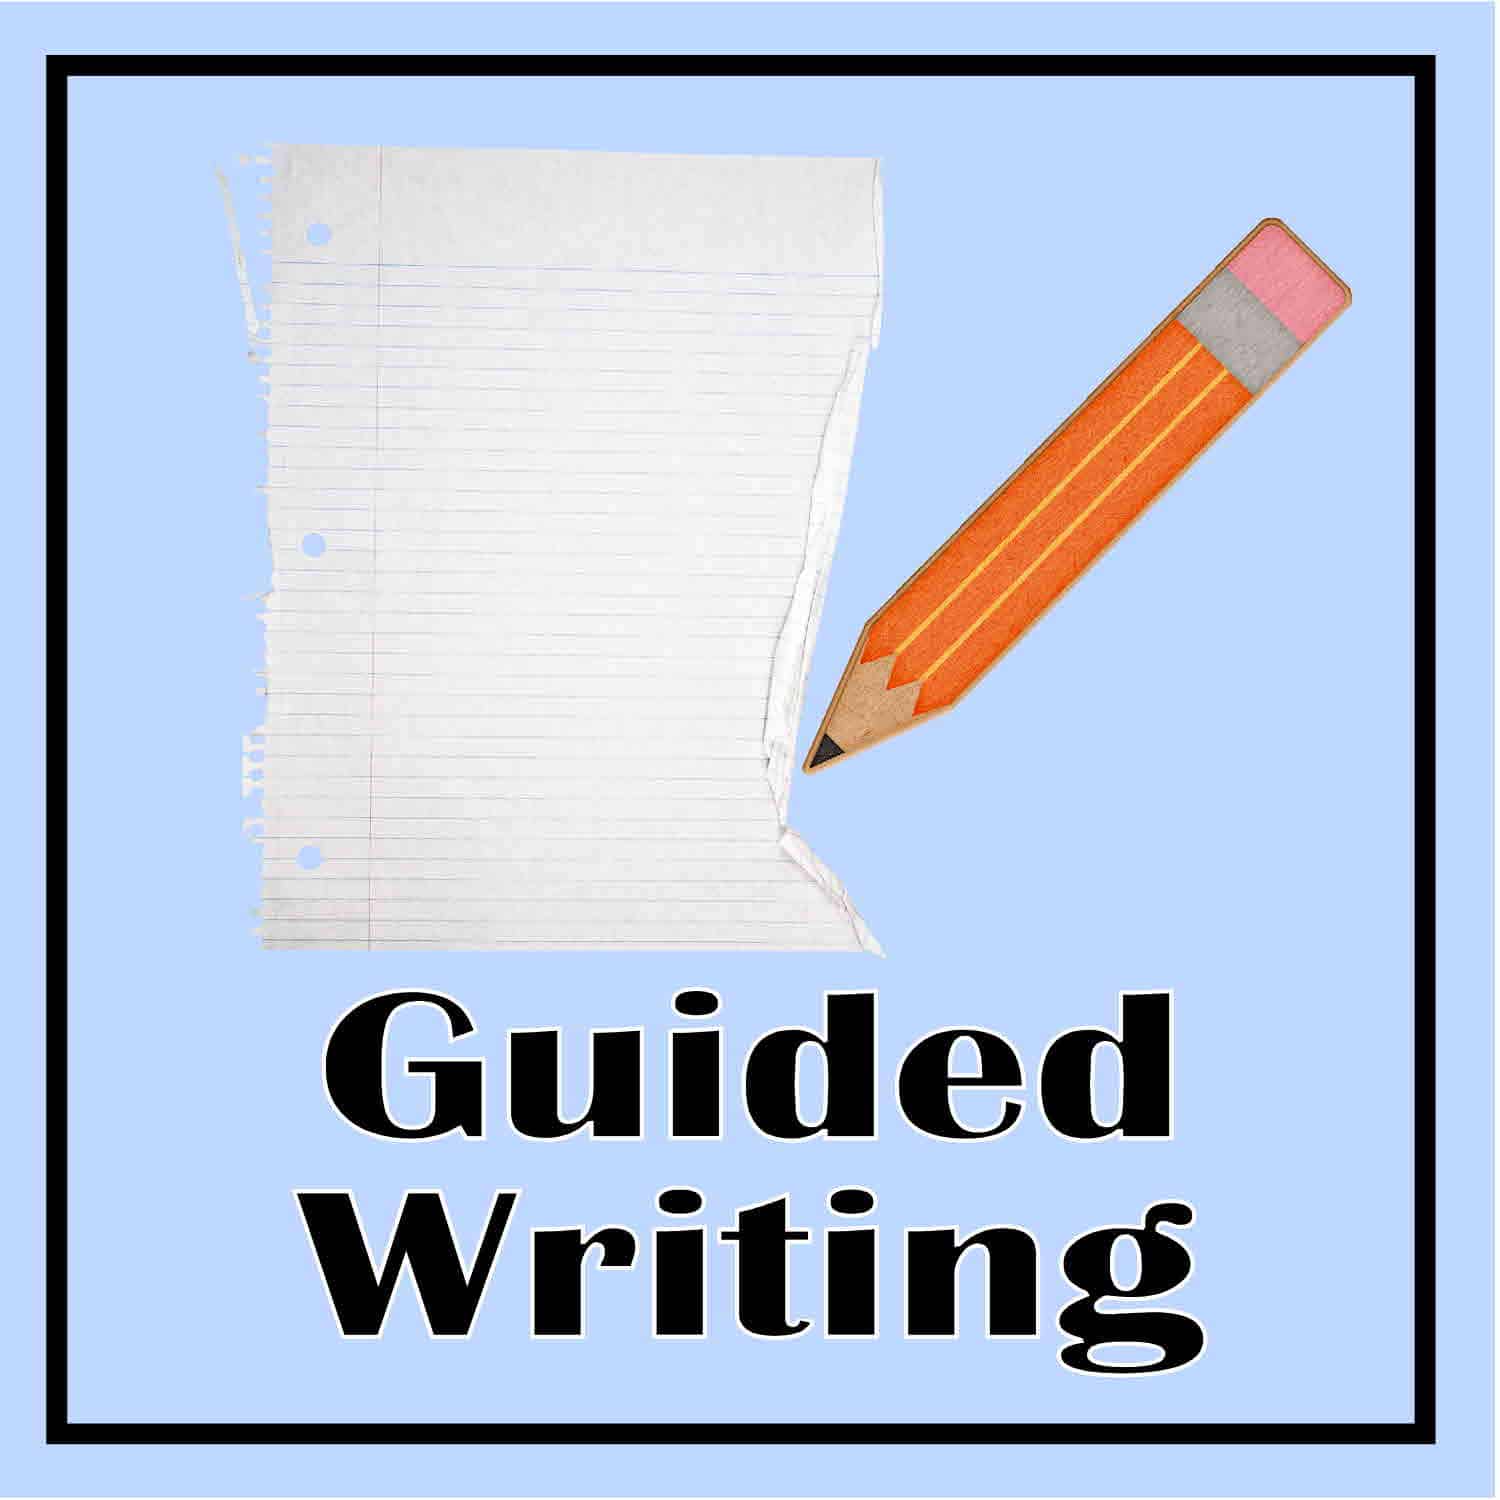 writingg-the-curriculum-corner-123